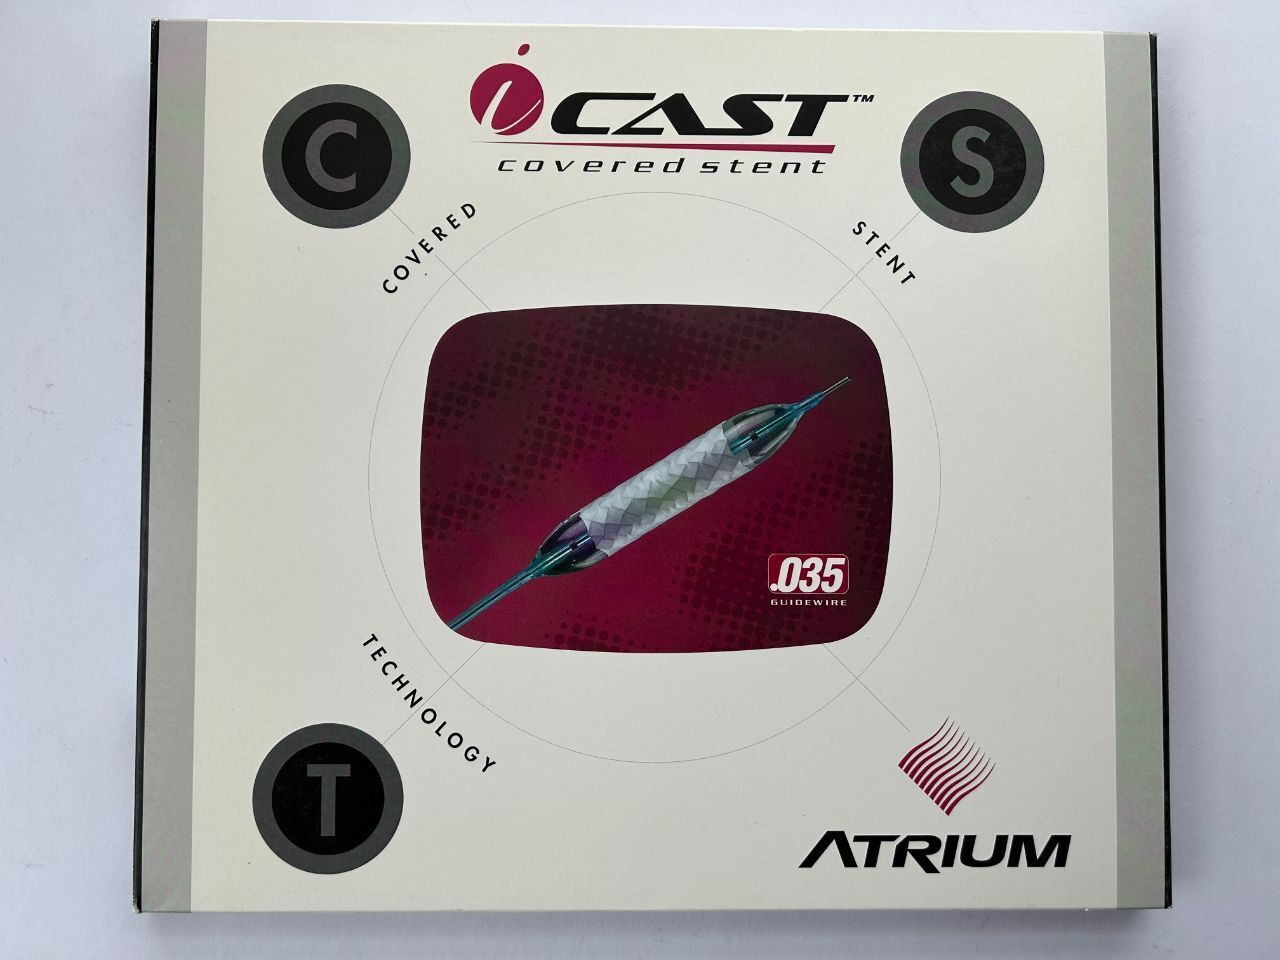 ATRIUM CAST covered stent 9mm x 38mm x 120cm REF: 85418 DATE: 2012/04